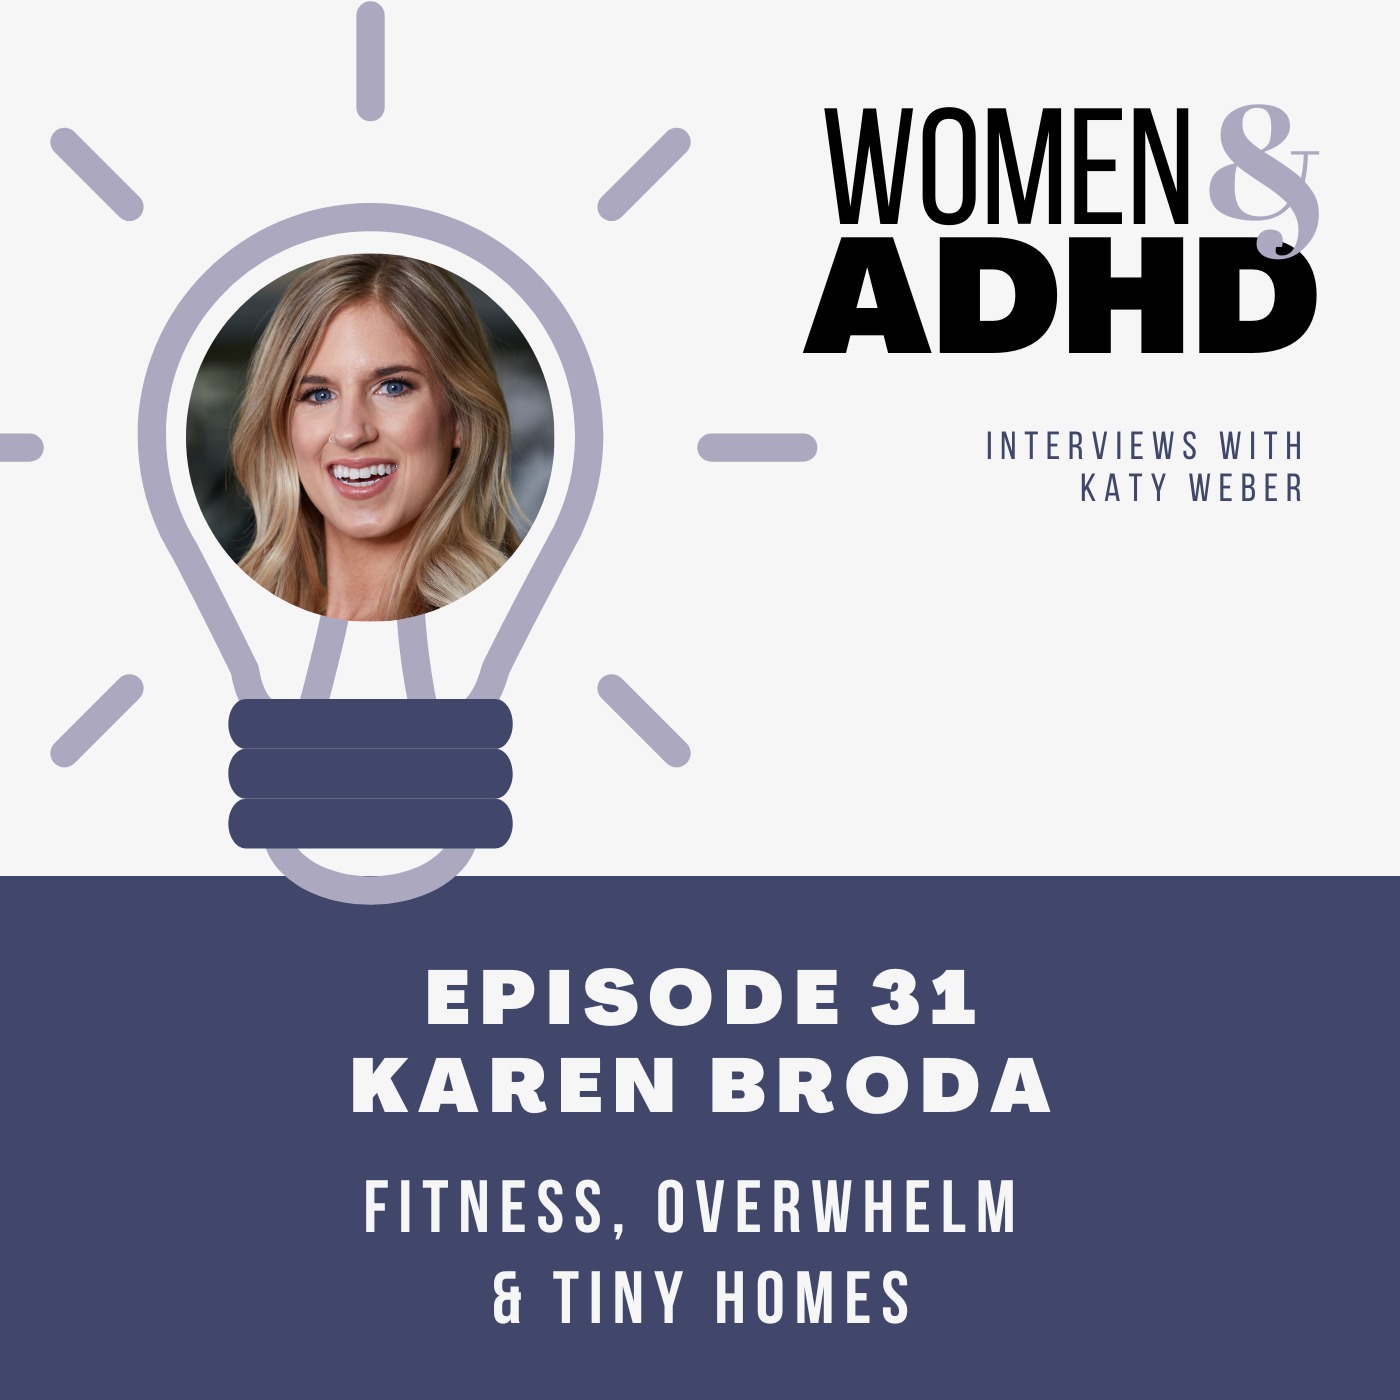 Karen Broda: Fitness, overwhelm & tiny homes